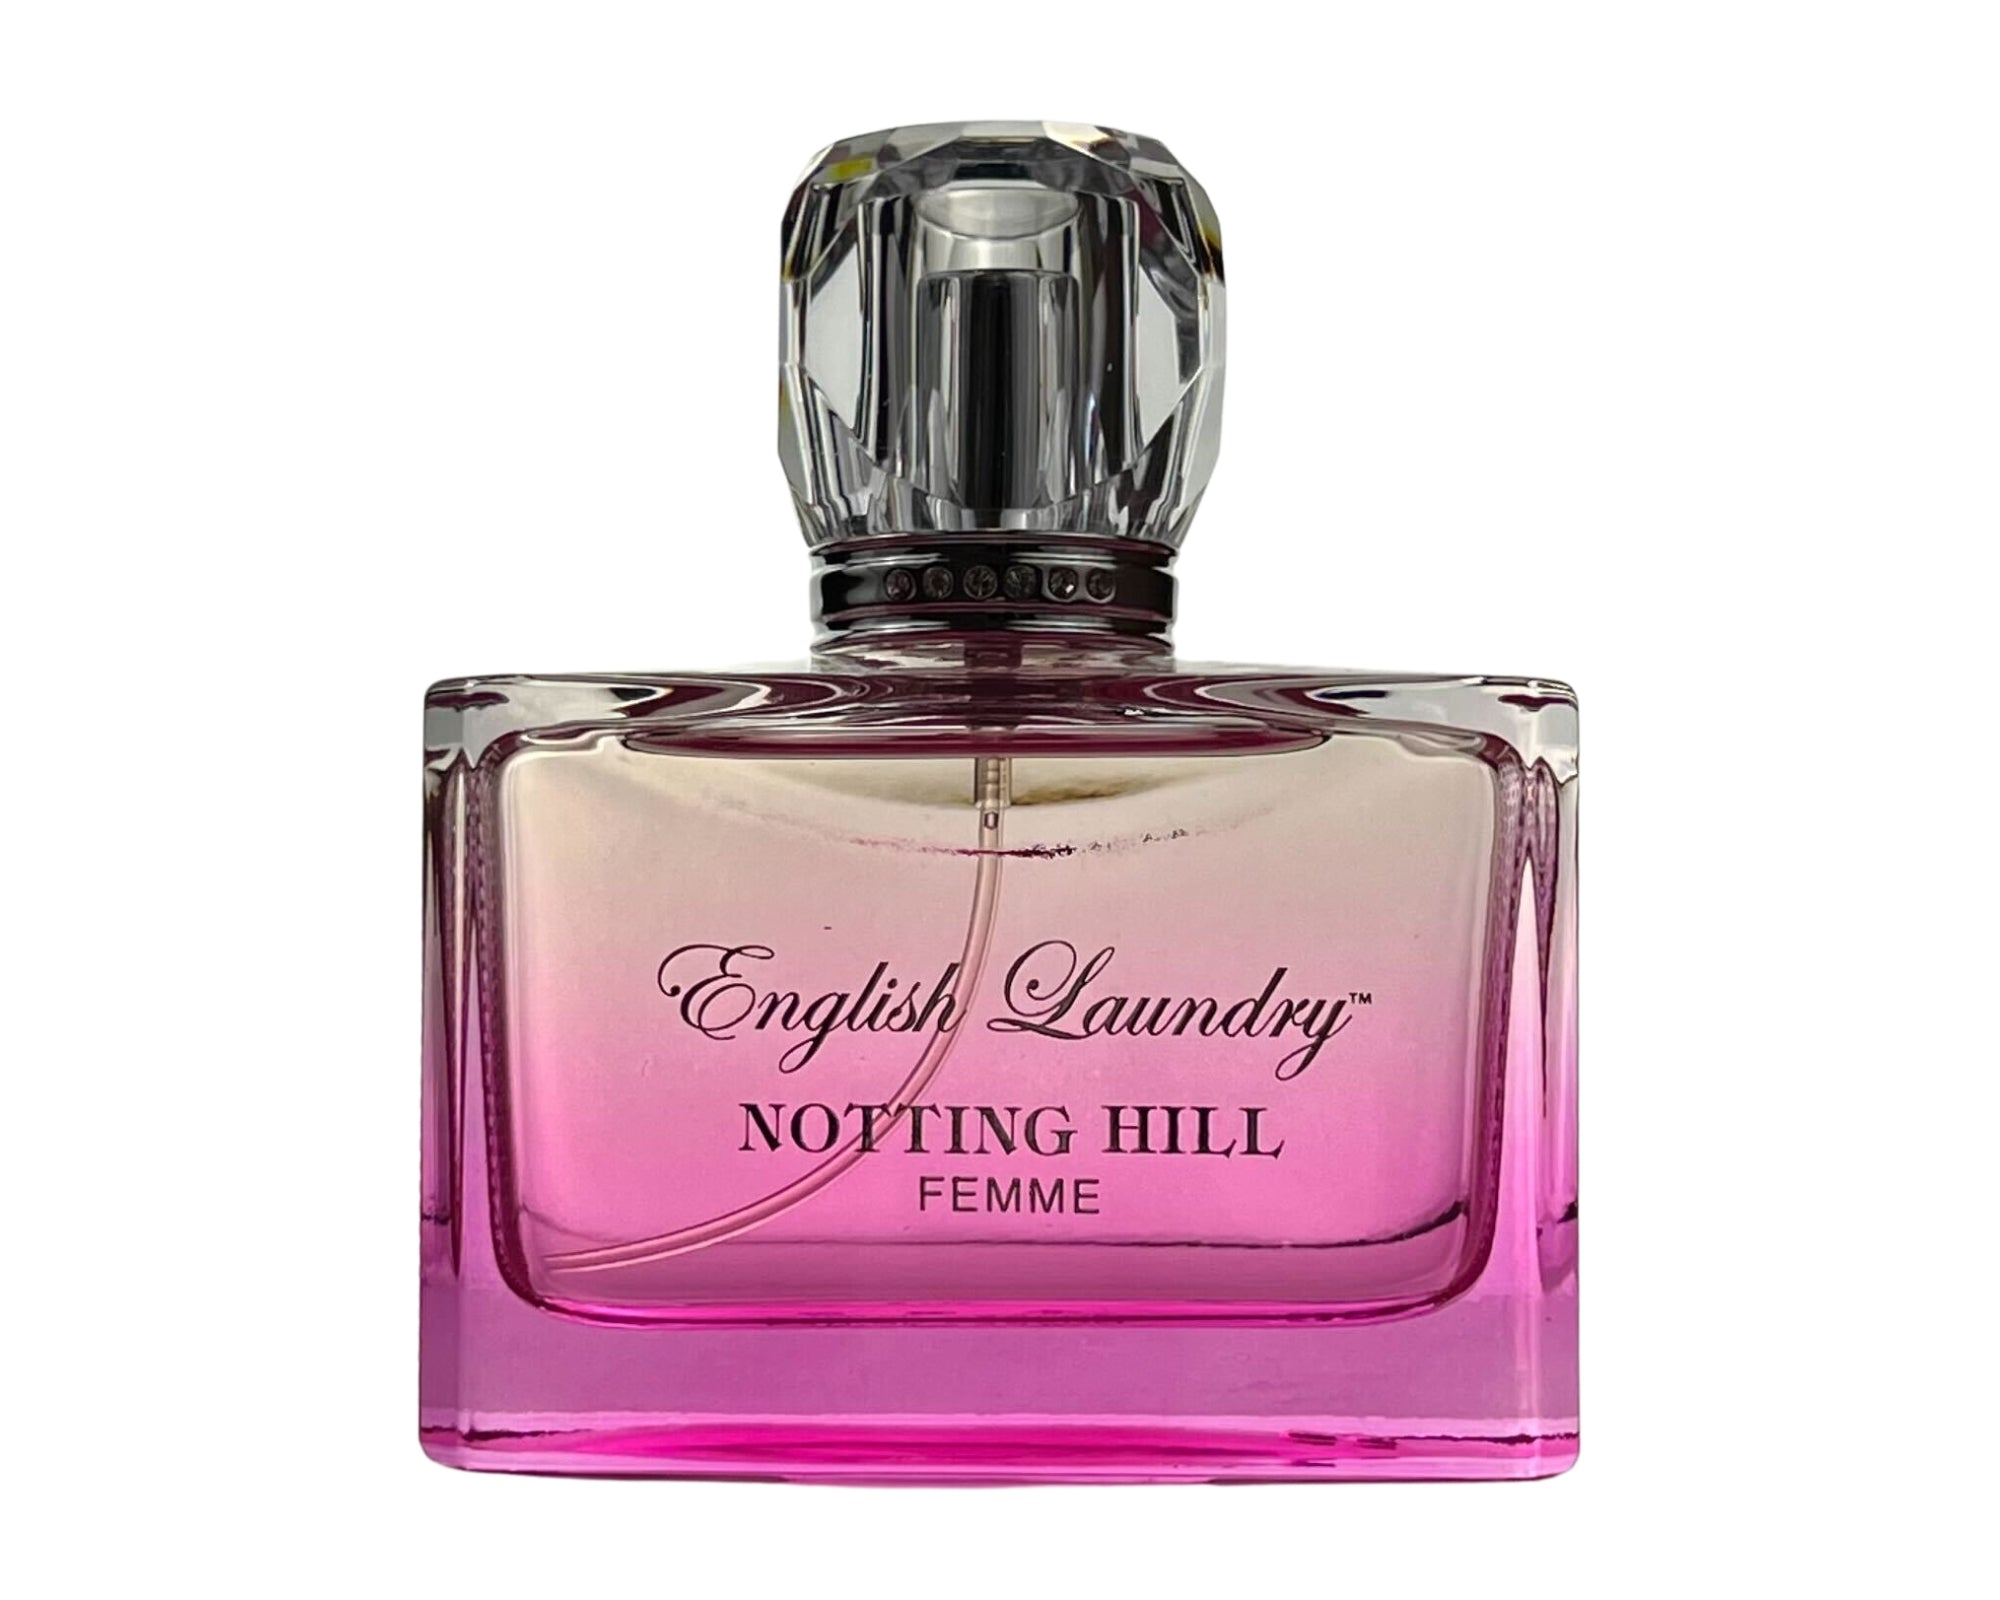 Notting Hill Femme Eau De Parfum for Women